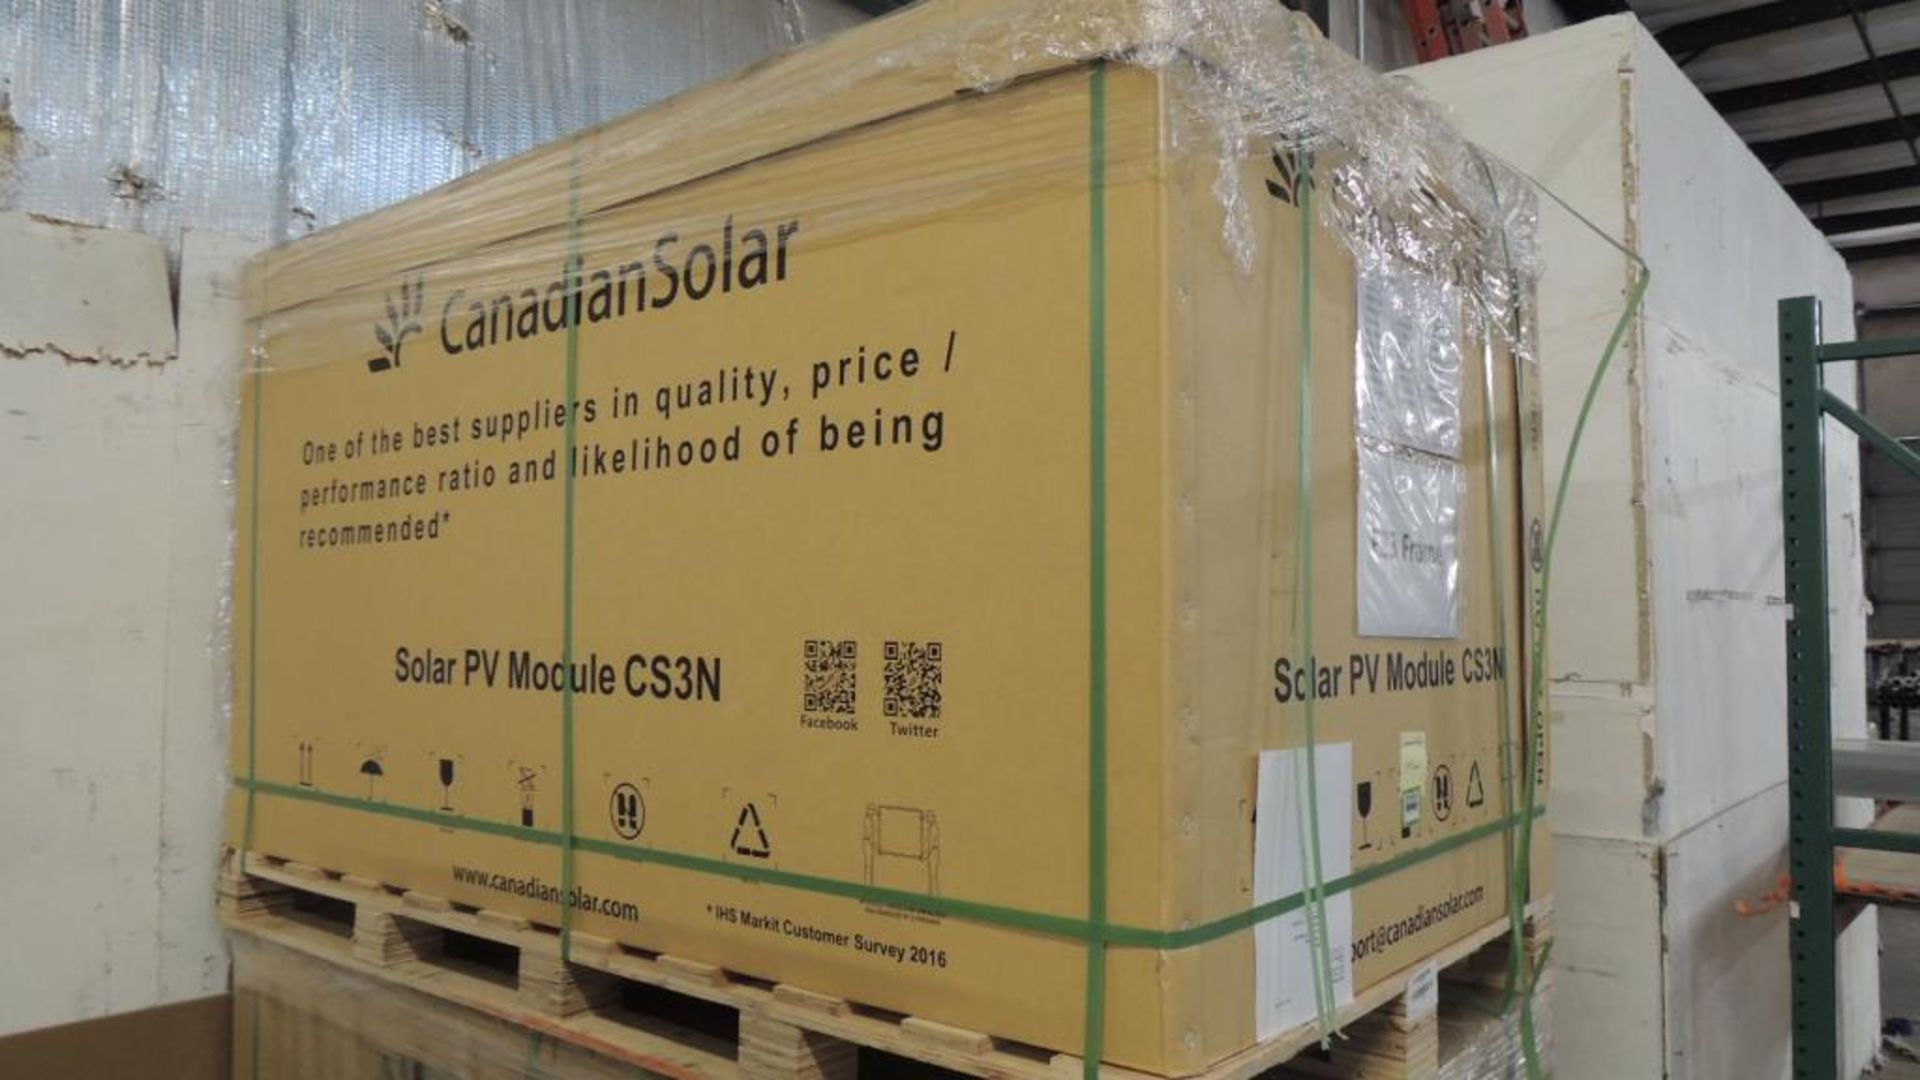 Canadian Solar Panels - Image 2 of 2